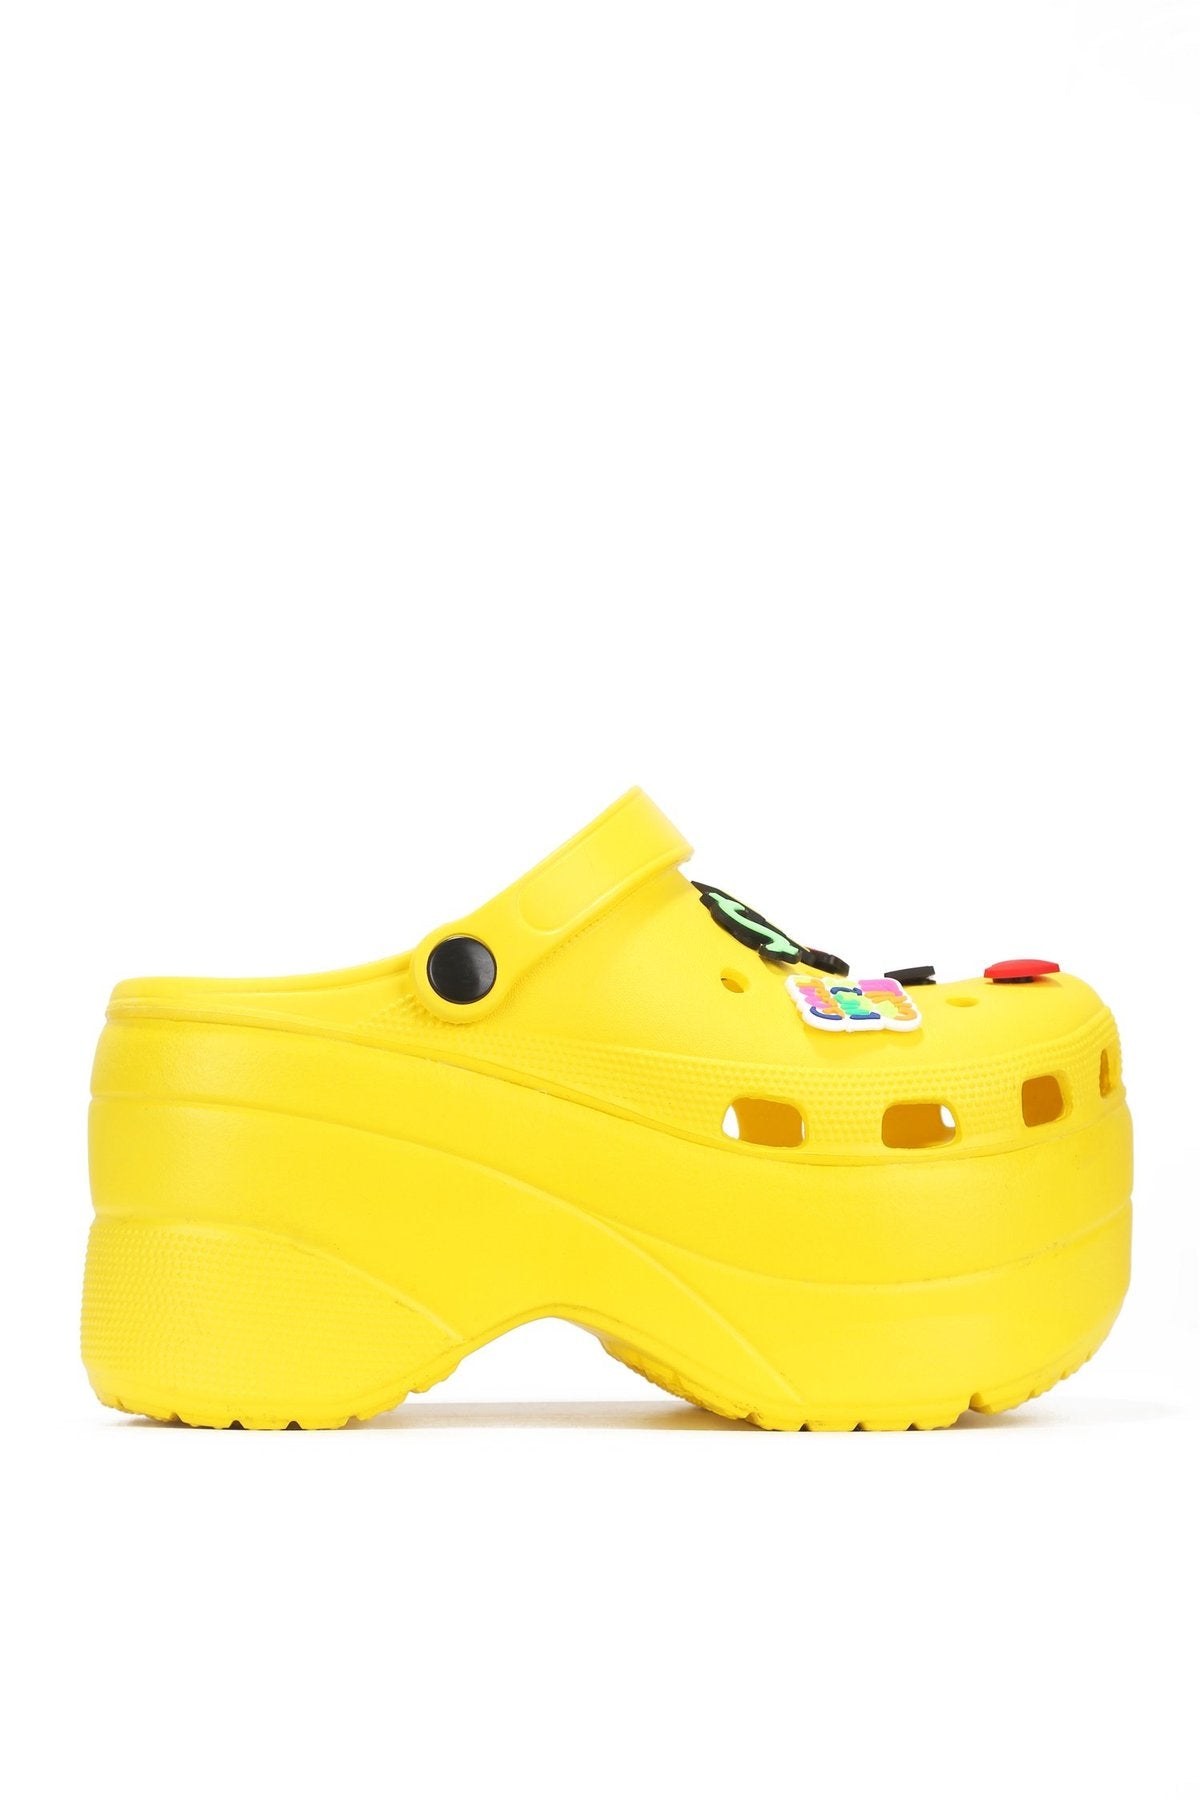 cape robbin yellow platform crocs